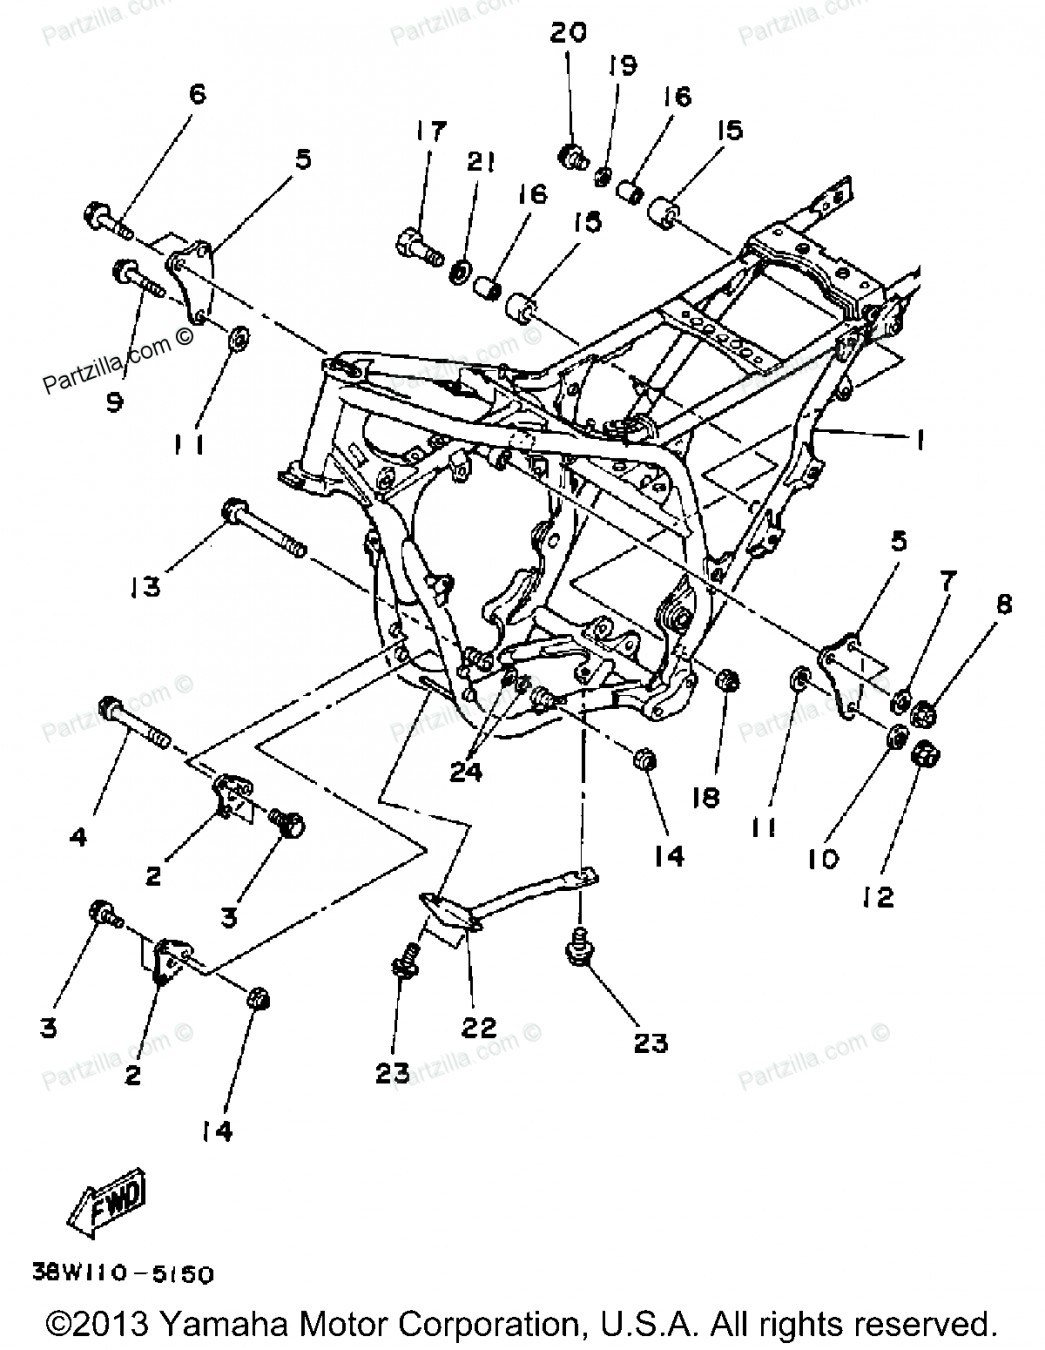 Lincoln 225 Welder Generator Wiring Diagrams | Manual E-Books - Lincoln 225 Arc Welder Wiring Diagram